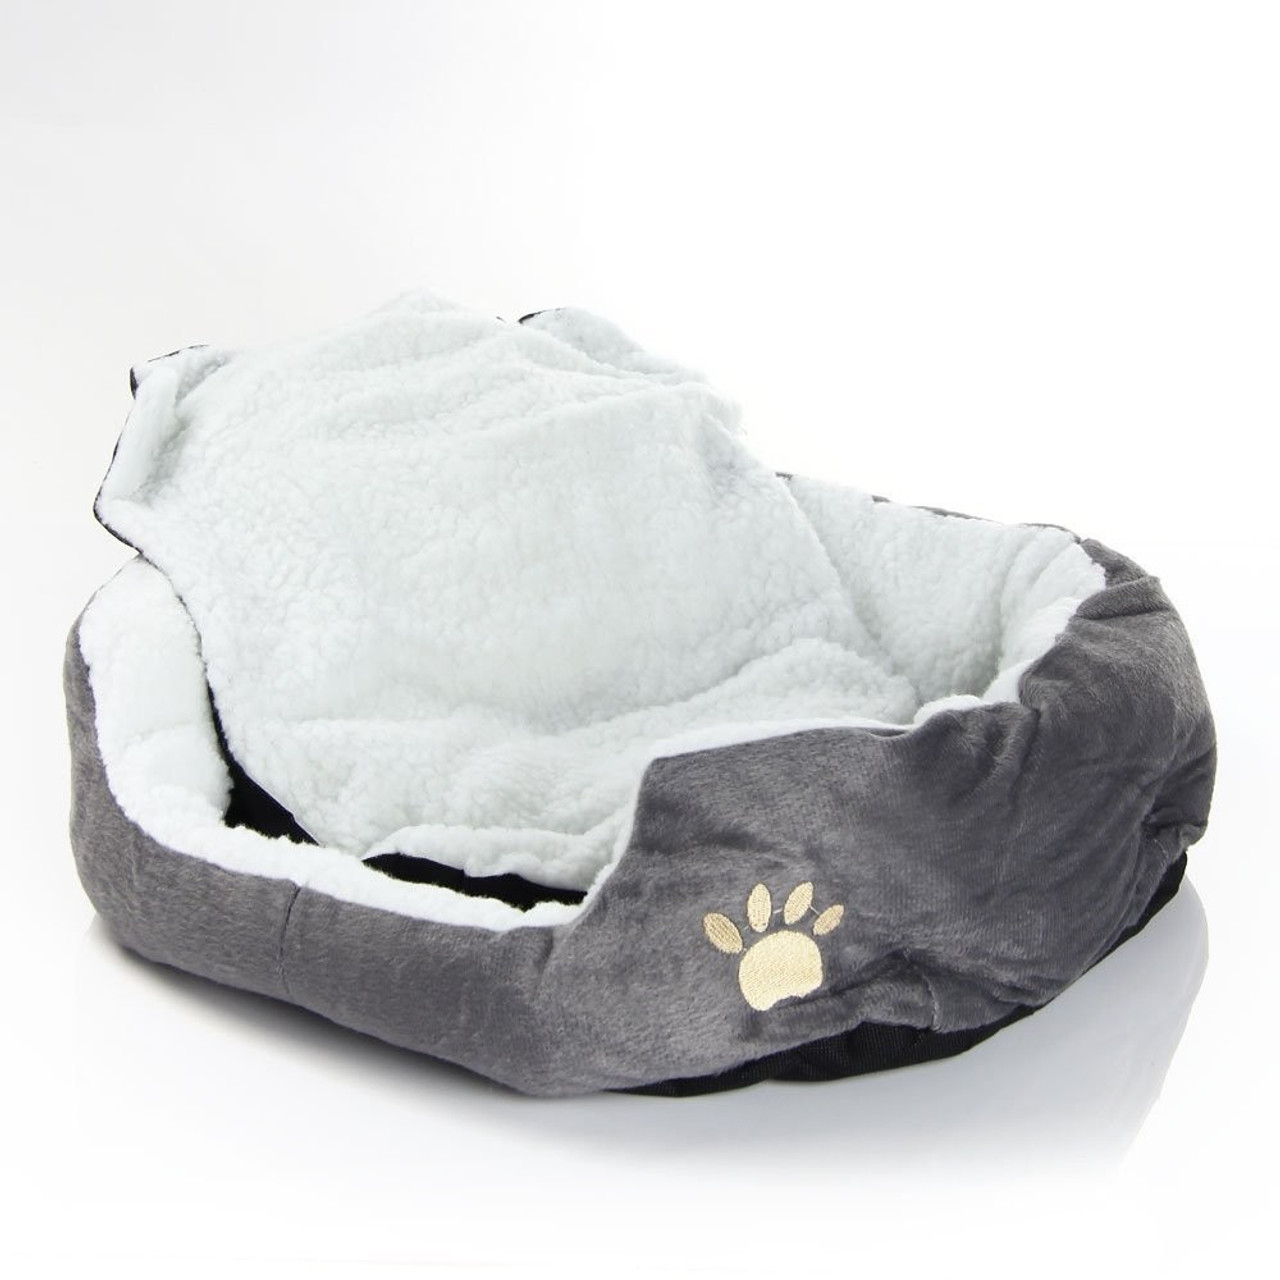 SMALL Soft Comfy REX LEATHER & FUR Washable Dog Pet Cat Warm Basket Bed BLACK 